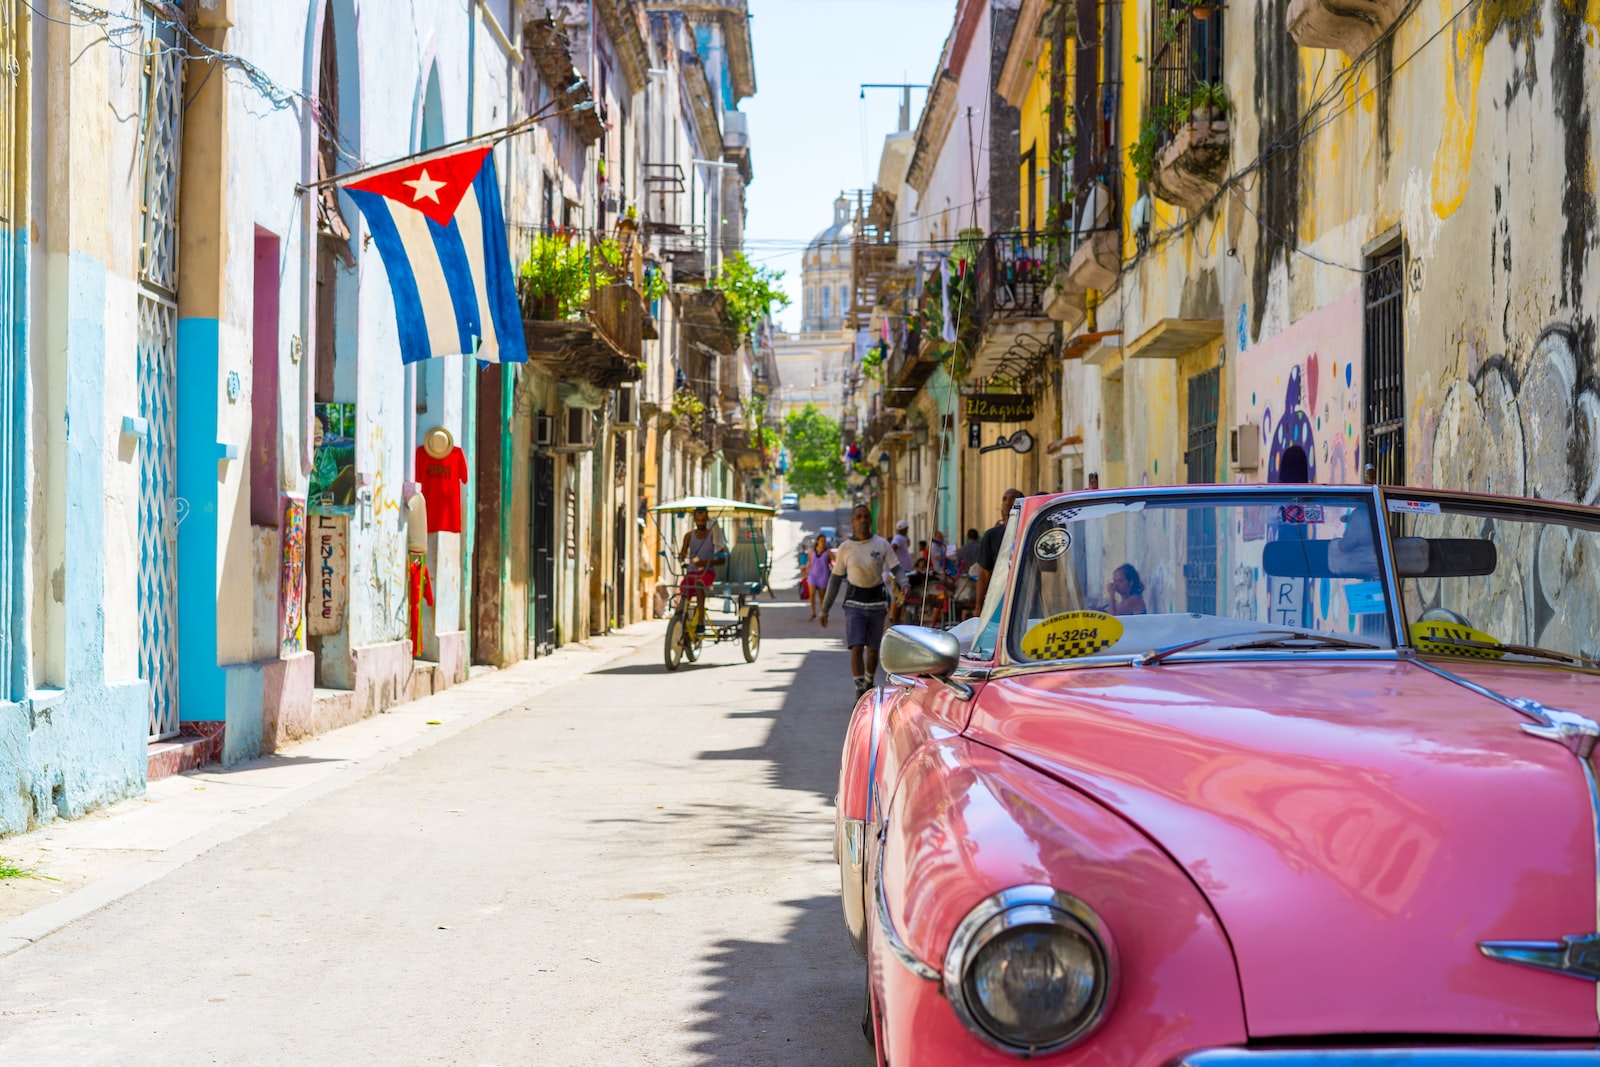 wakacje na kubie, kuba varadero, atrakcje turystyczne kuba, kuba pogoda, jaka pogoda na kubie, kuba klimat, gdzie leży kuba, ile się leci na kubę, wakacje last minute kuba, all inclusive kuba, jaki hotel na kubie